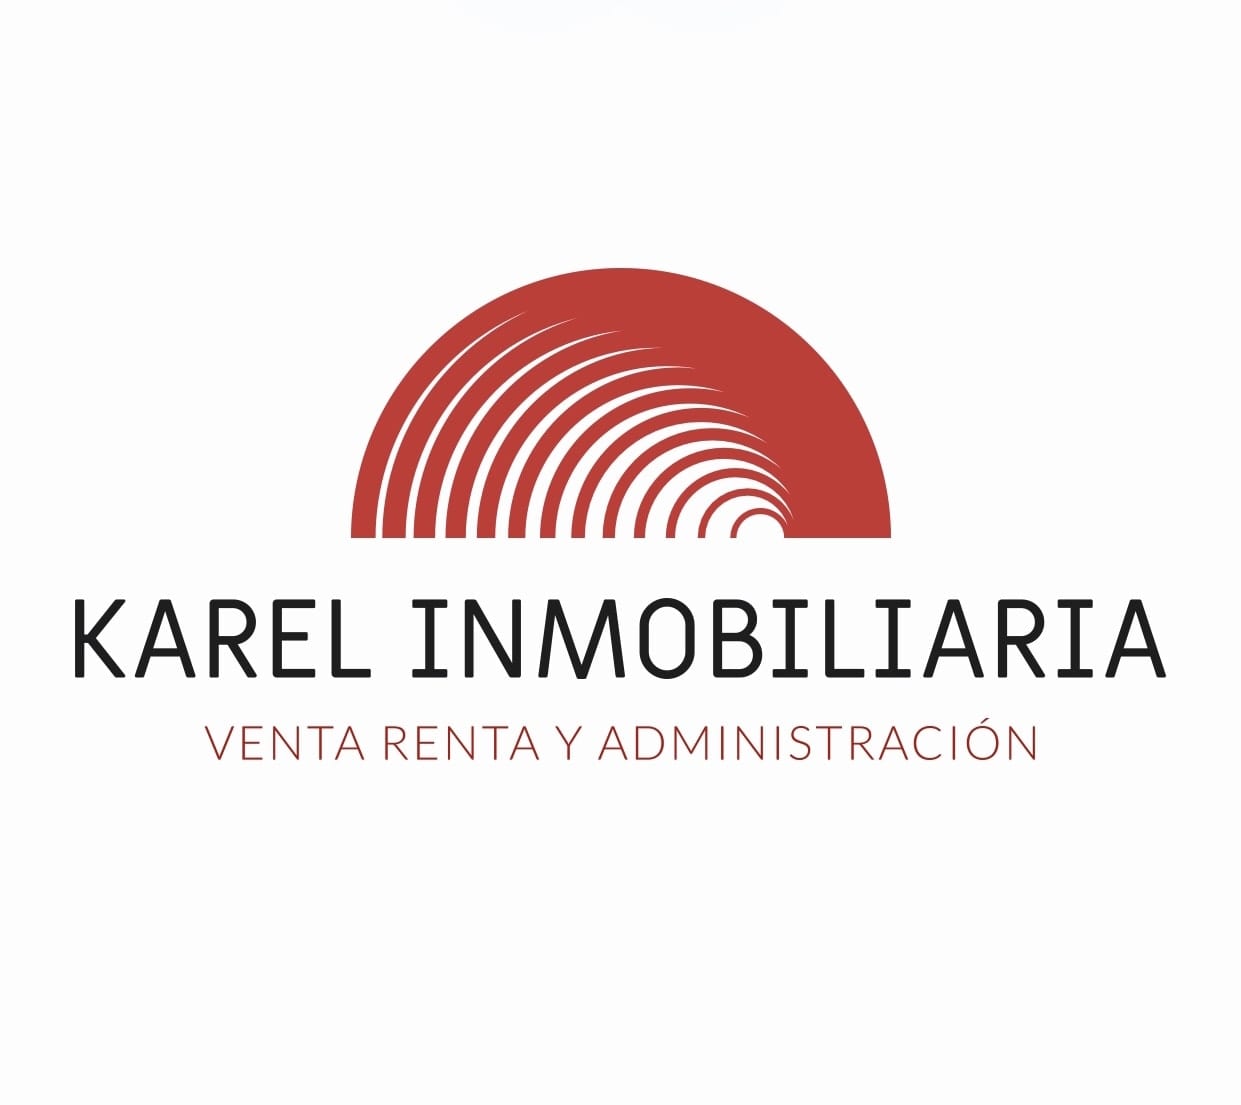 Karel Inmobiliaria